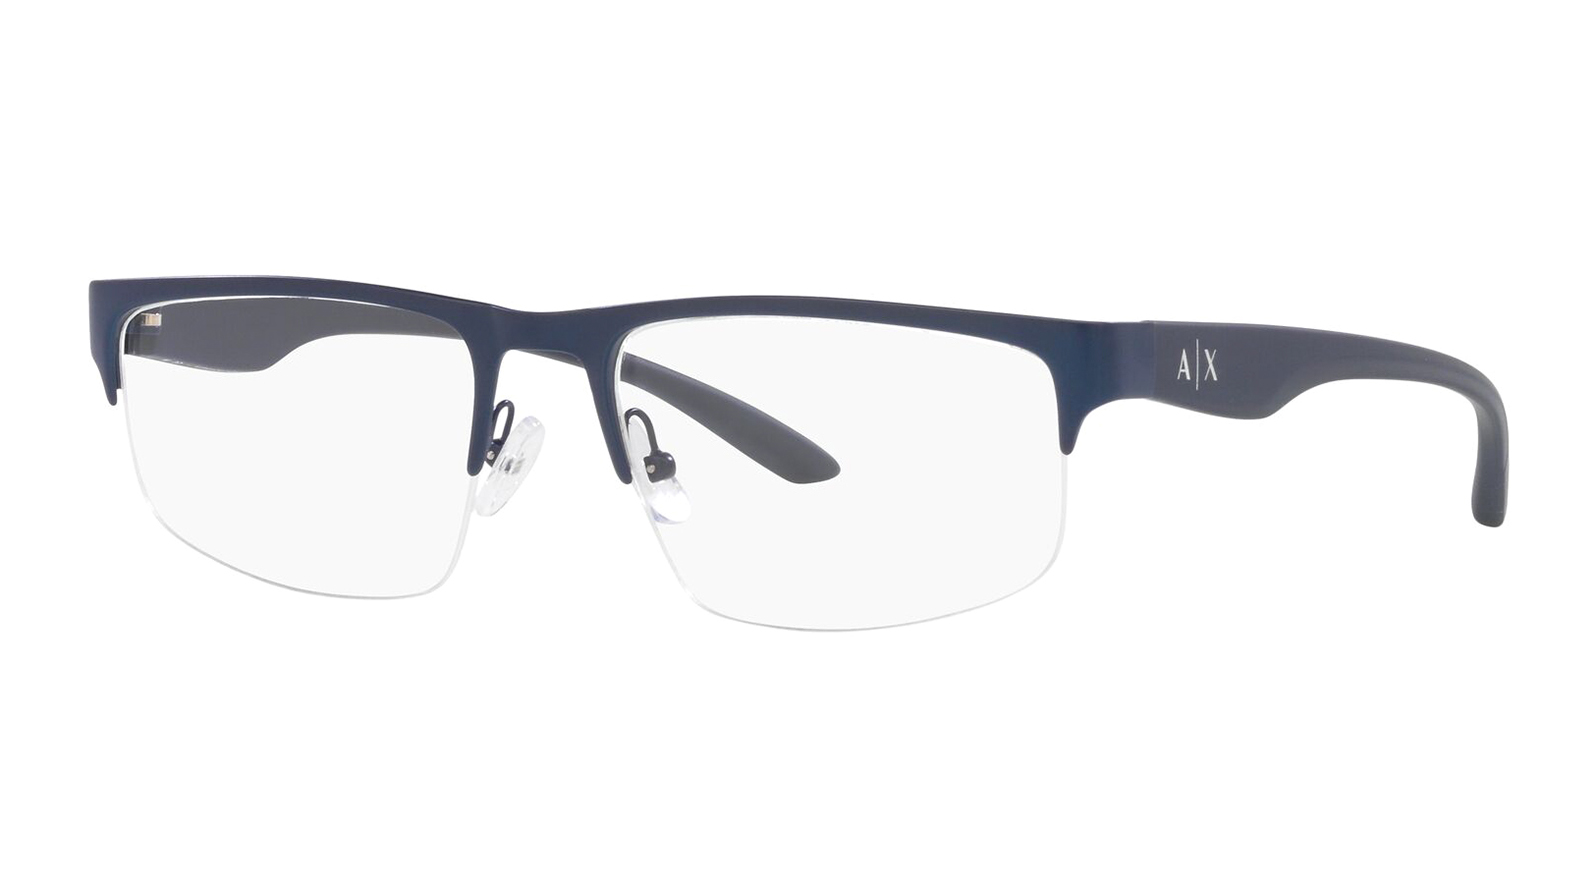 Armani Exchange 1054 6099 100 400 мужские бизнес очки для чтения анти синий свет металлическая рамка очки для чтения